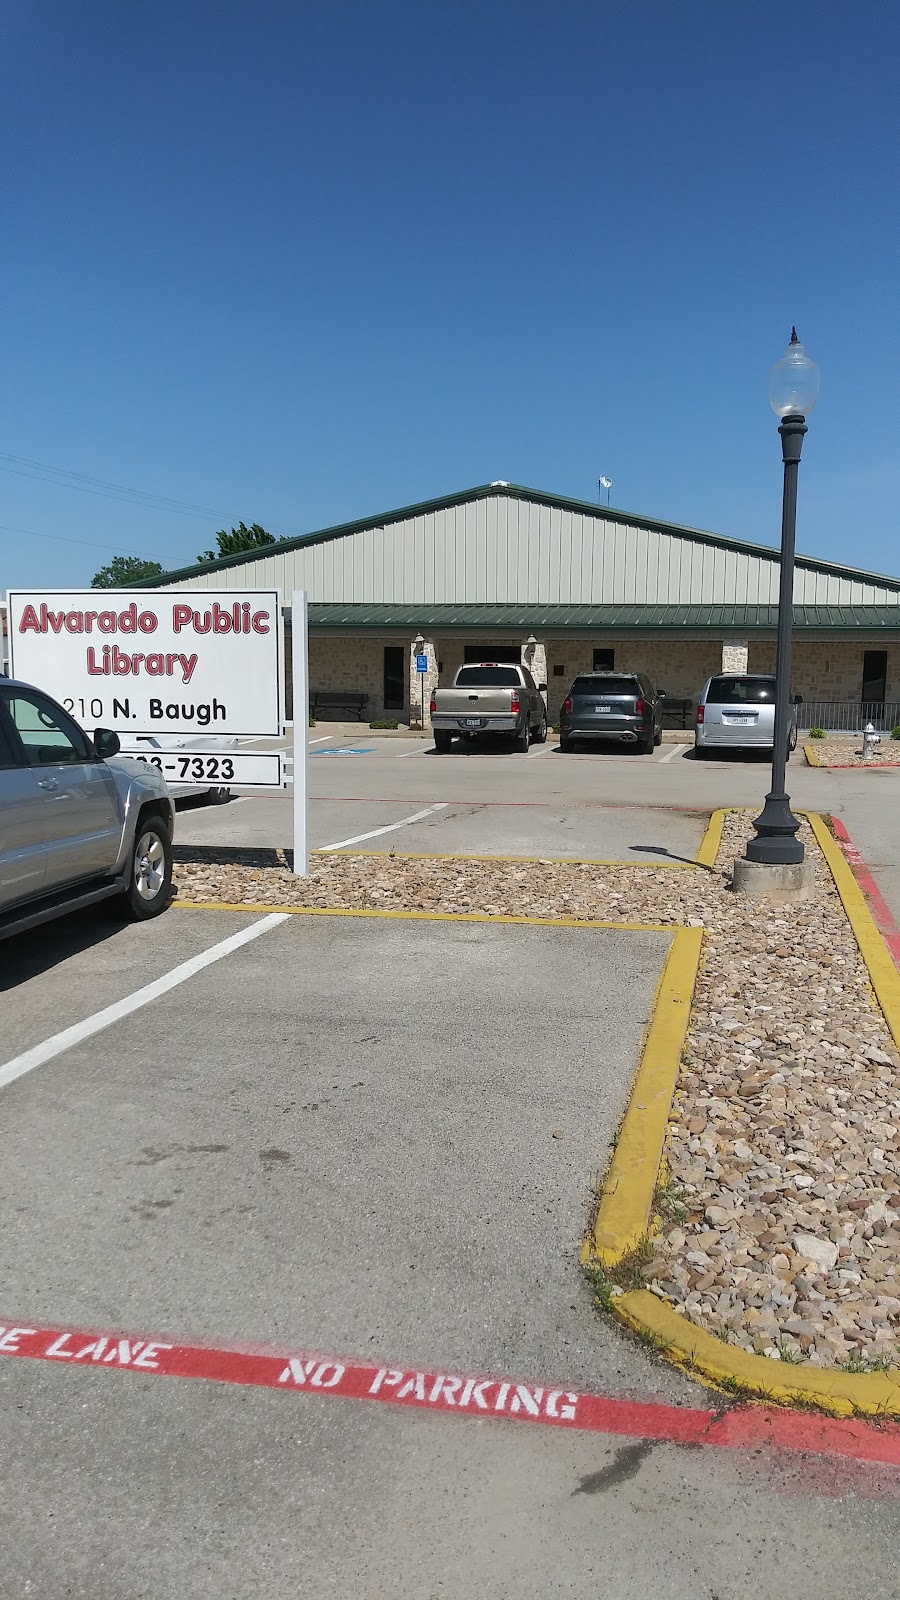 Alvarado Public Library | 210 N Baugh St, Alvarado, TX 76009 | Phone: (817) 783-7323